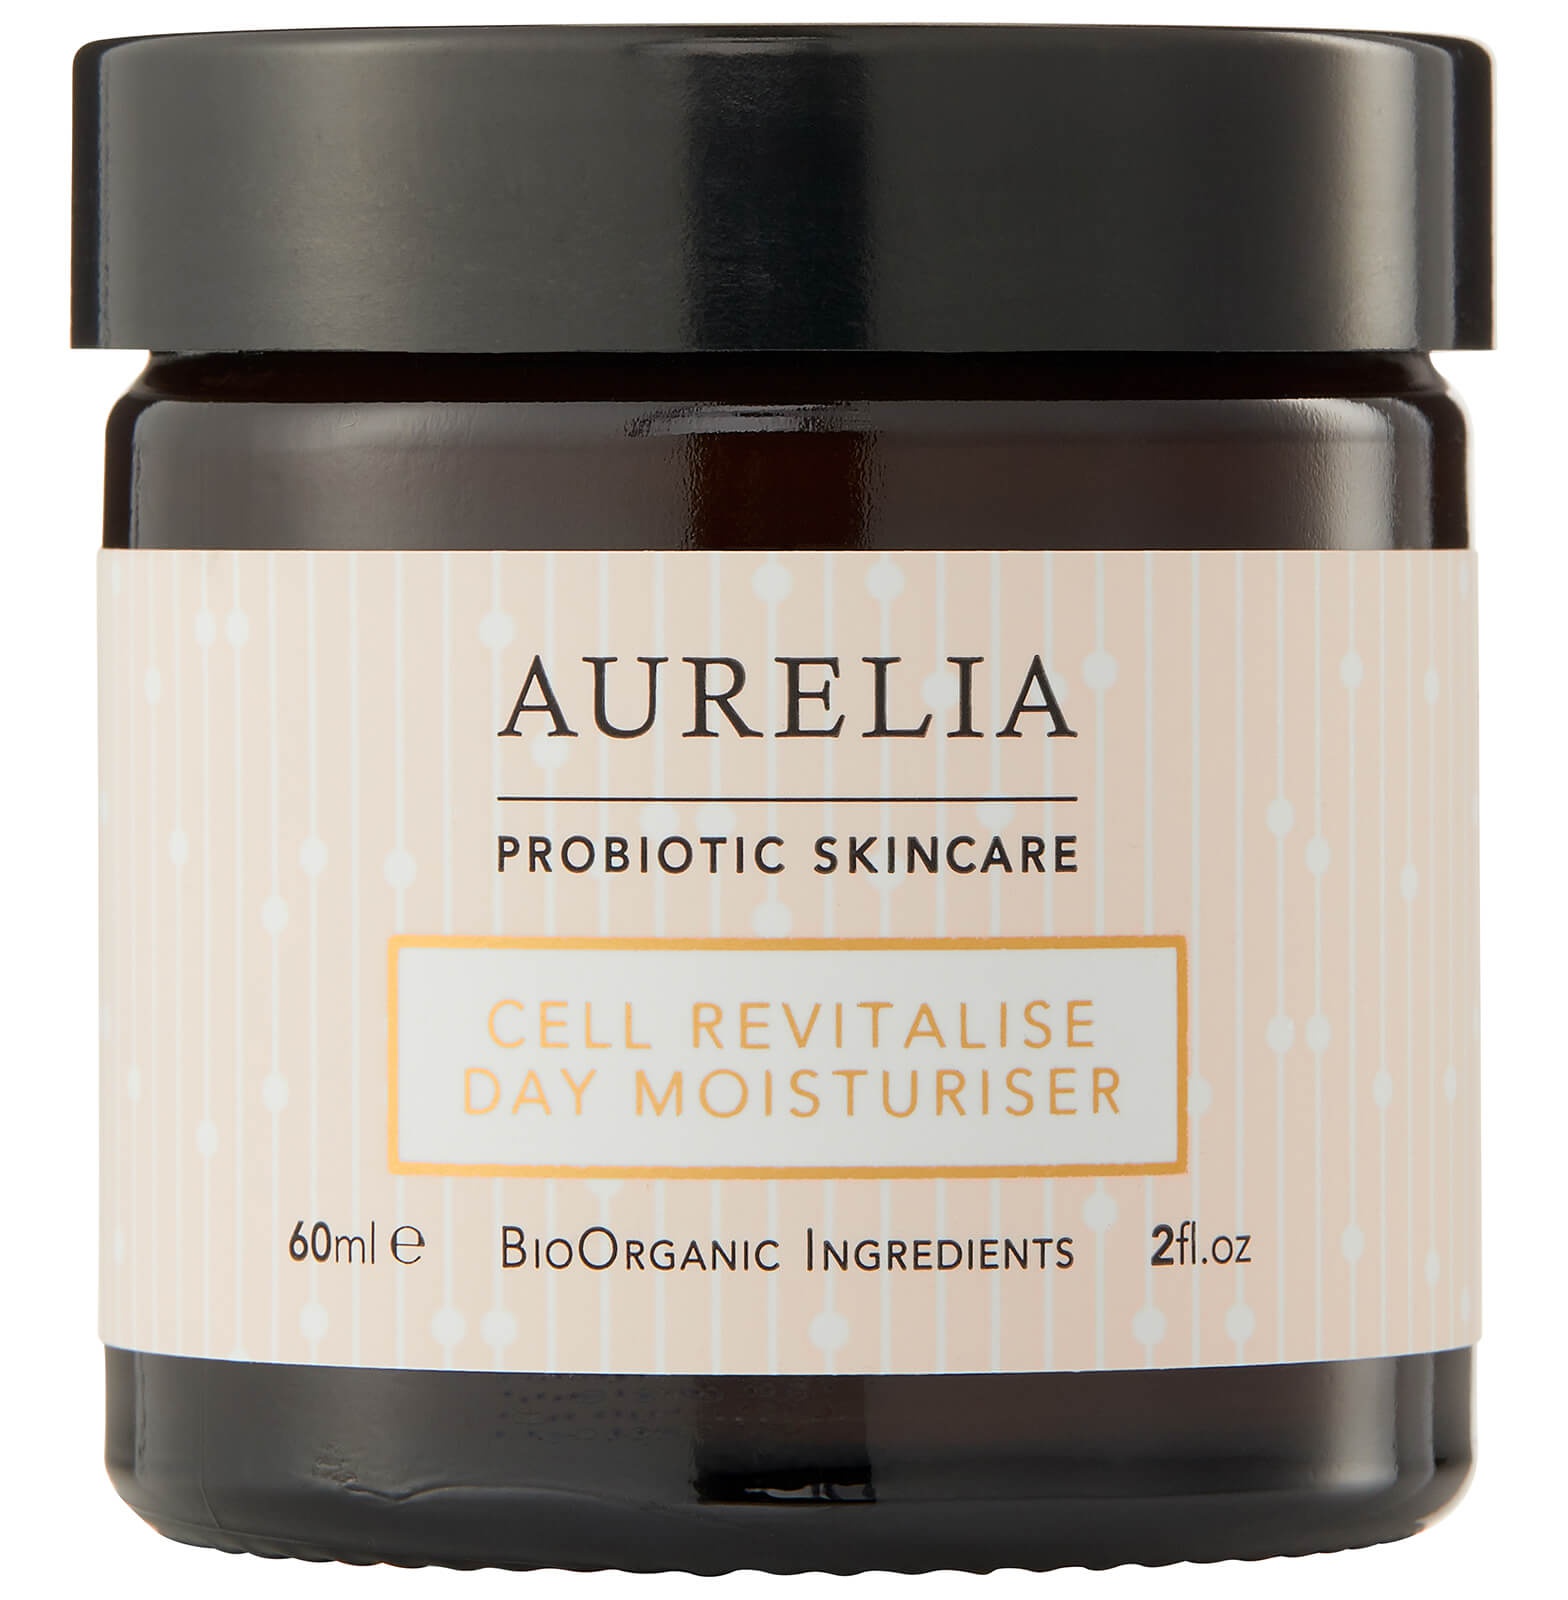 Aurelia Probiotic Skincare Cell Revitalise Day Moisturiser